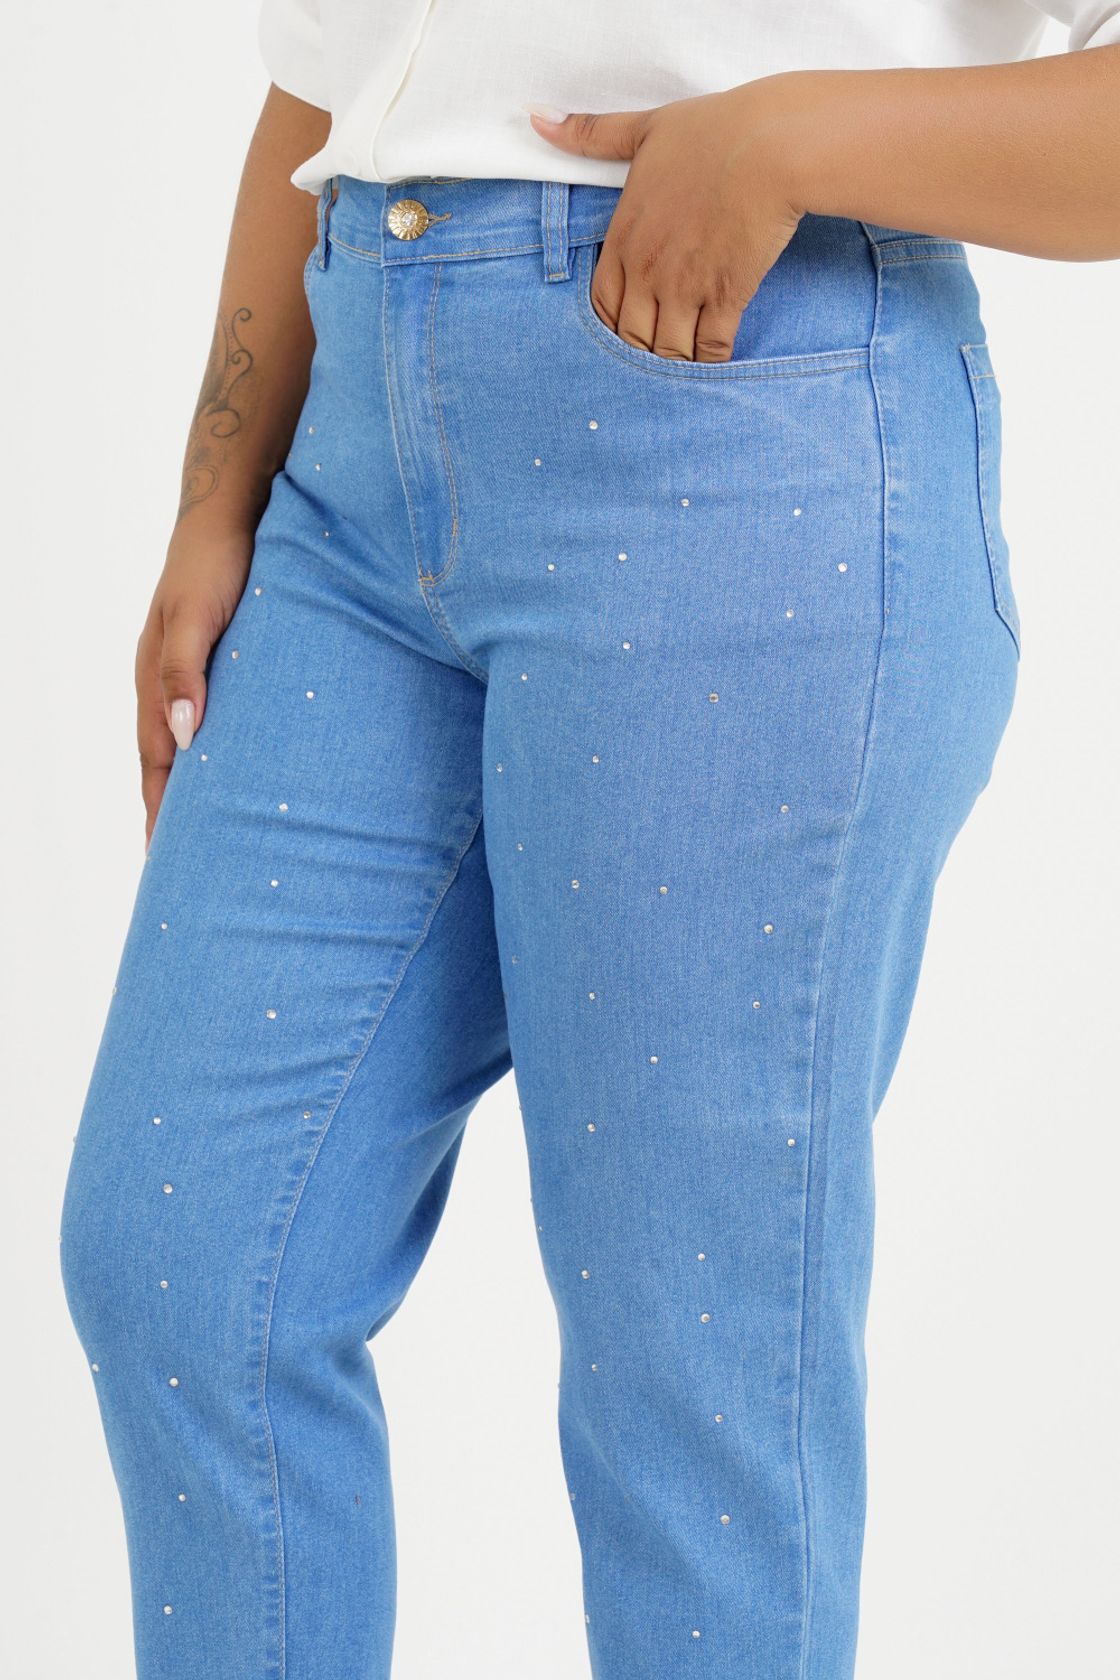 Calça Jeans Plus Size (Grade: 12 Pçs) - LAYMOM JEANS